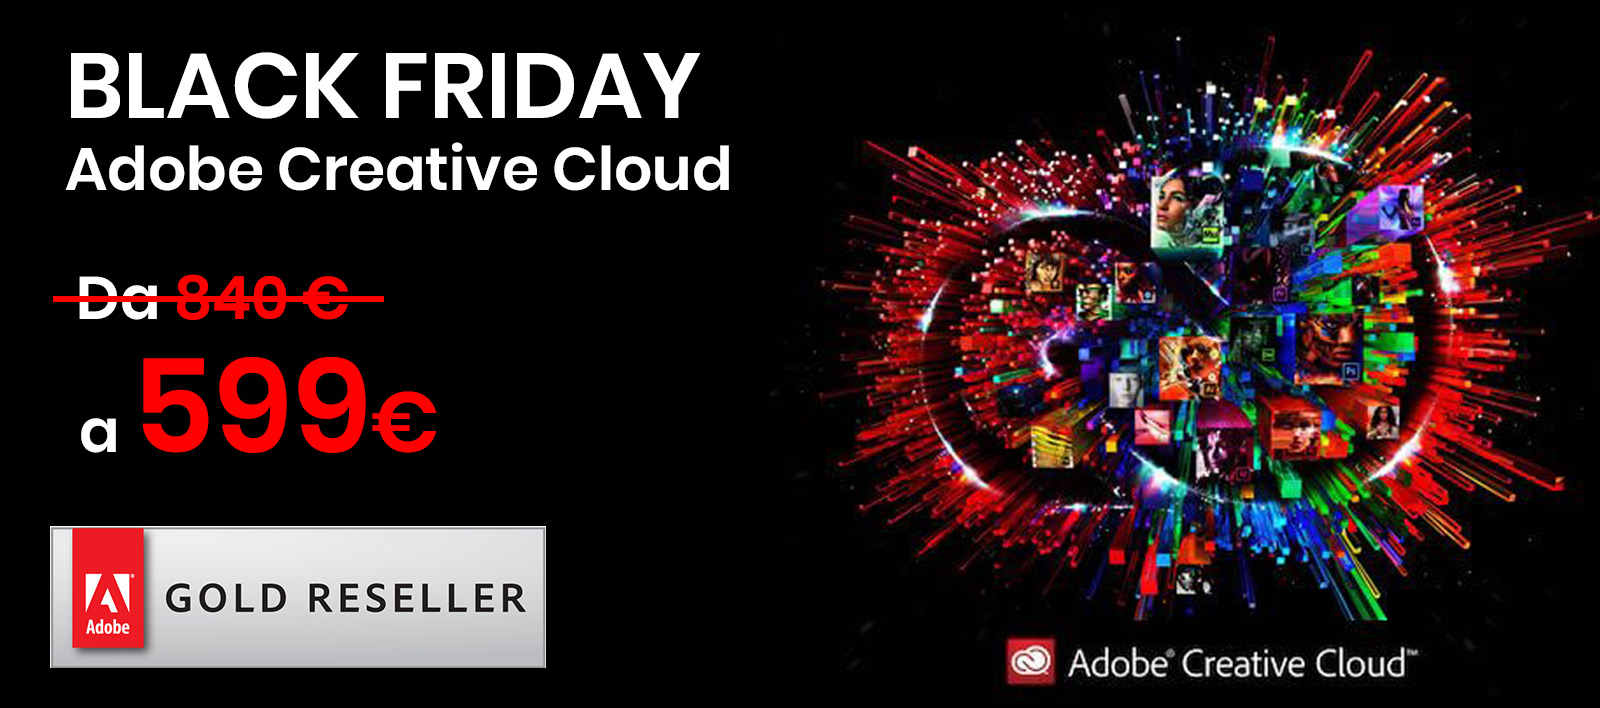 Black Friday Adobe Creative Cloud